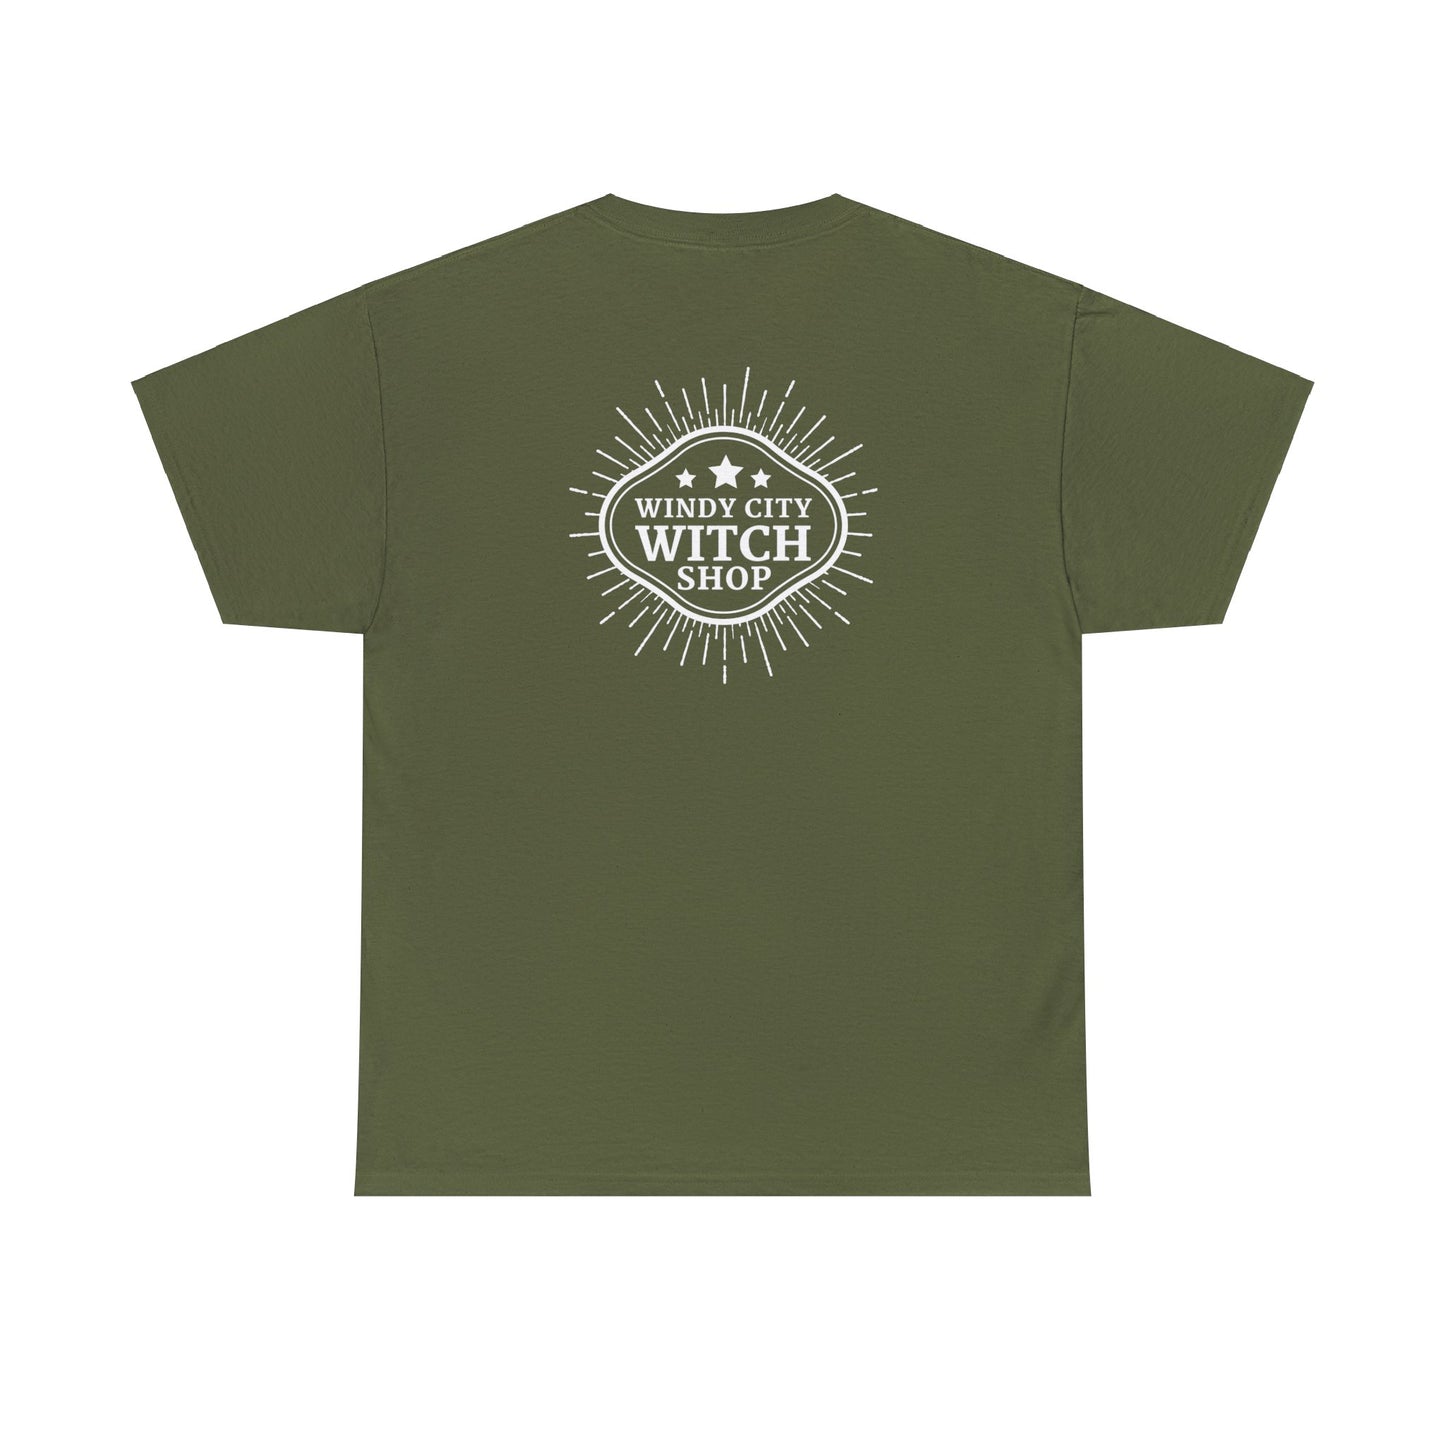 GenX Witch Cotton t-shirt